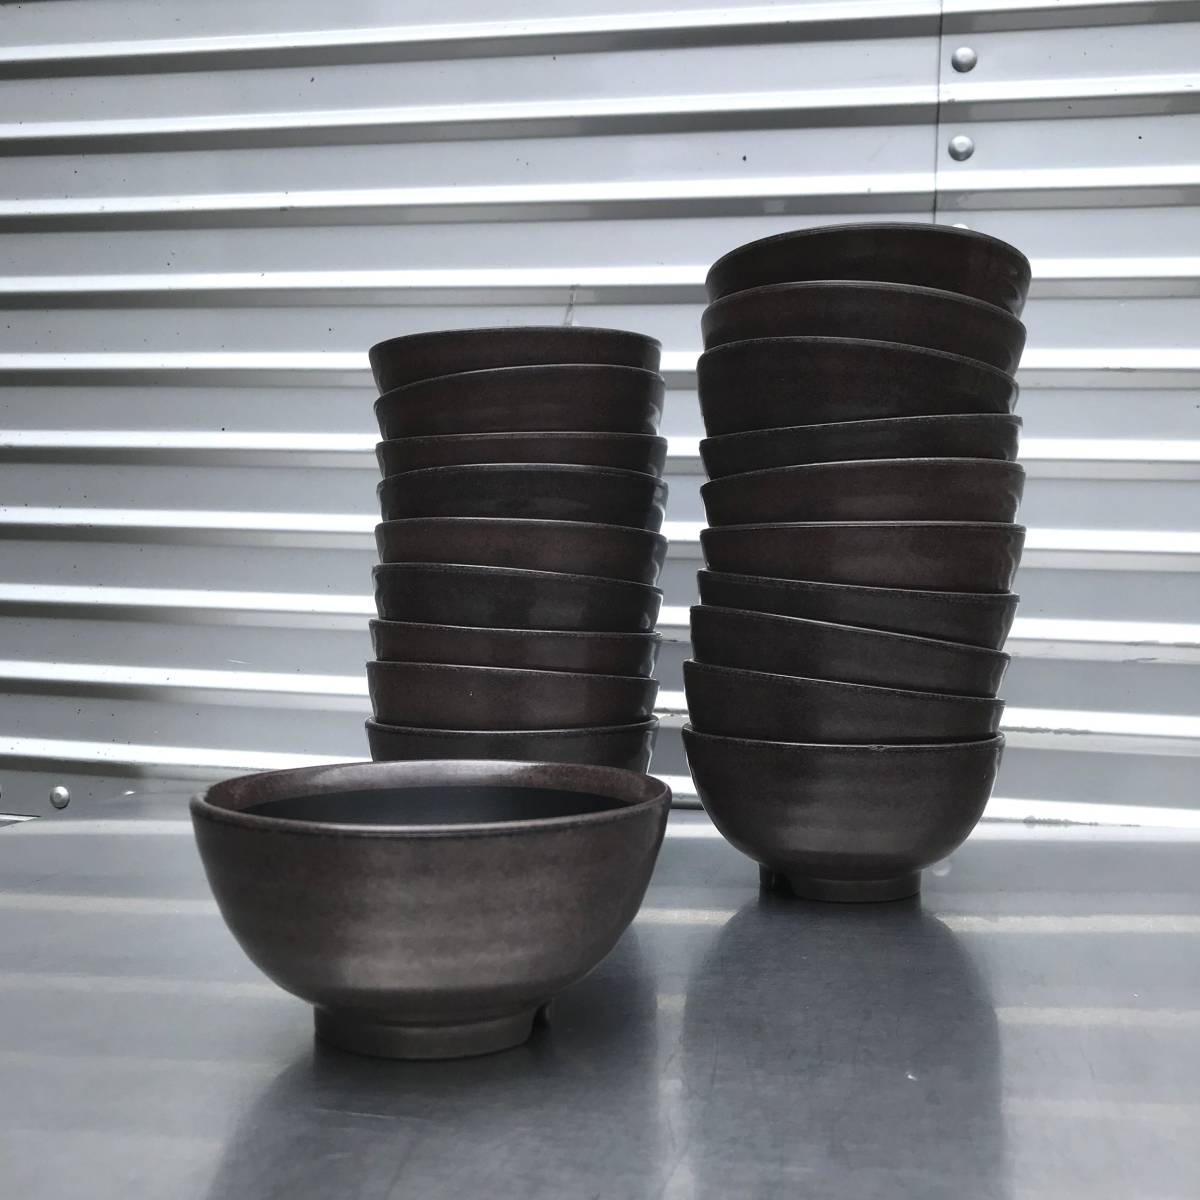 KK11 国際化工 メラミン食器 茶碗 A33 飯碗 ブラウン/黒 20個セットの画像1